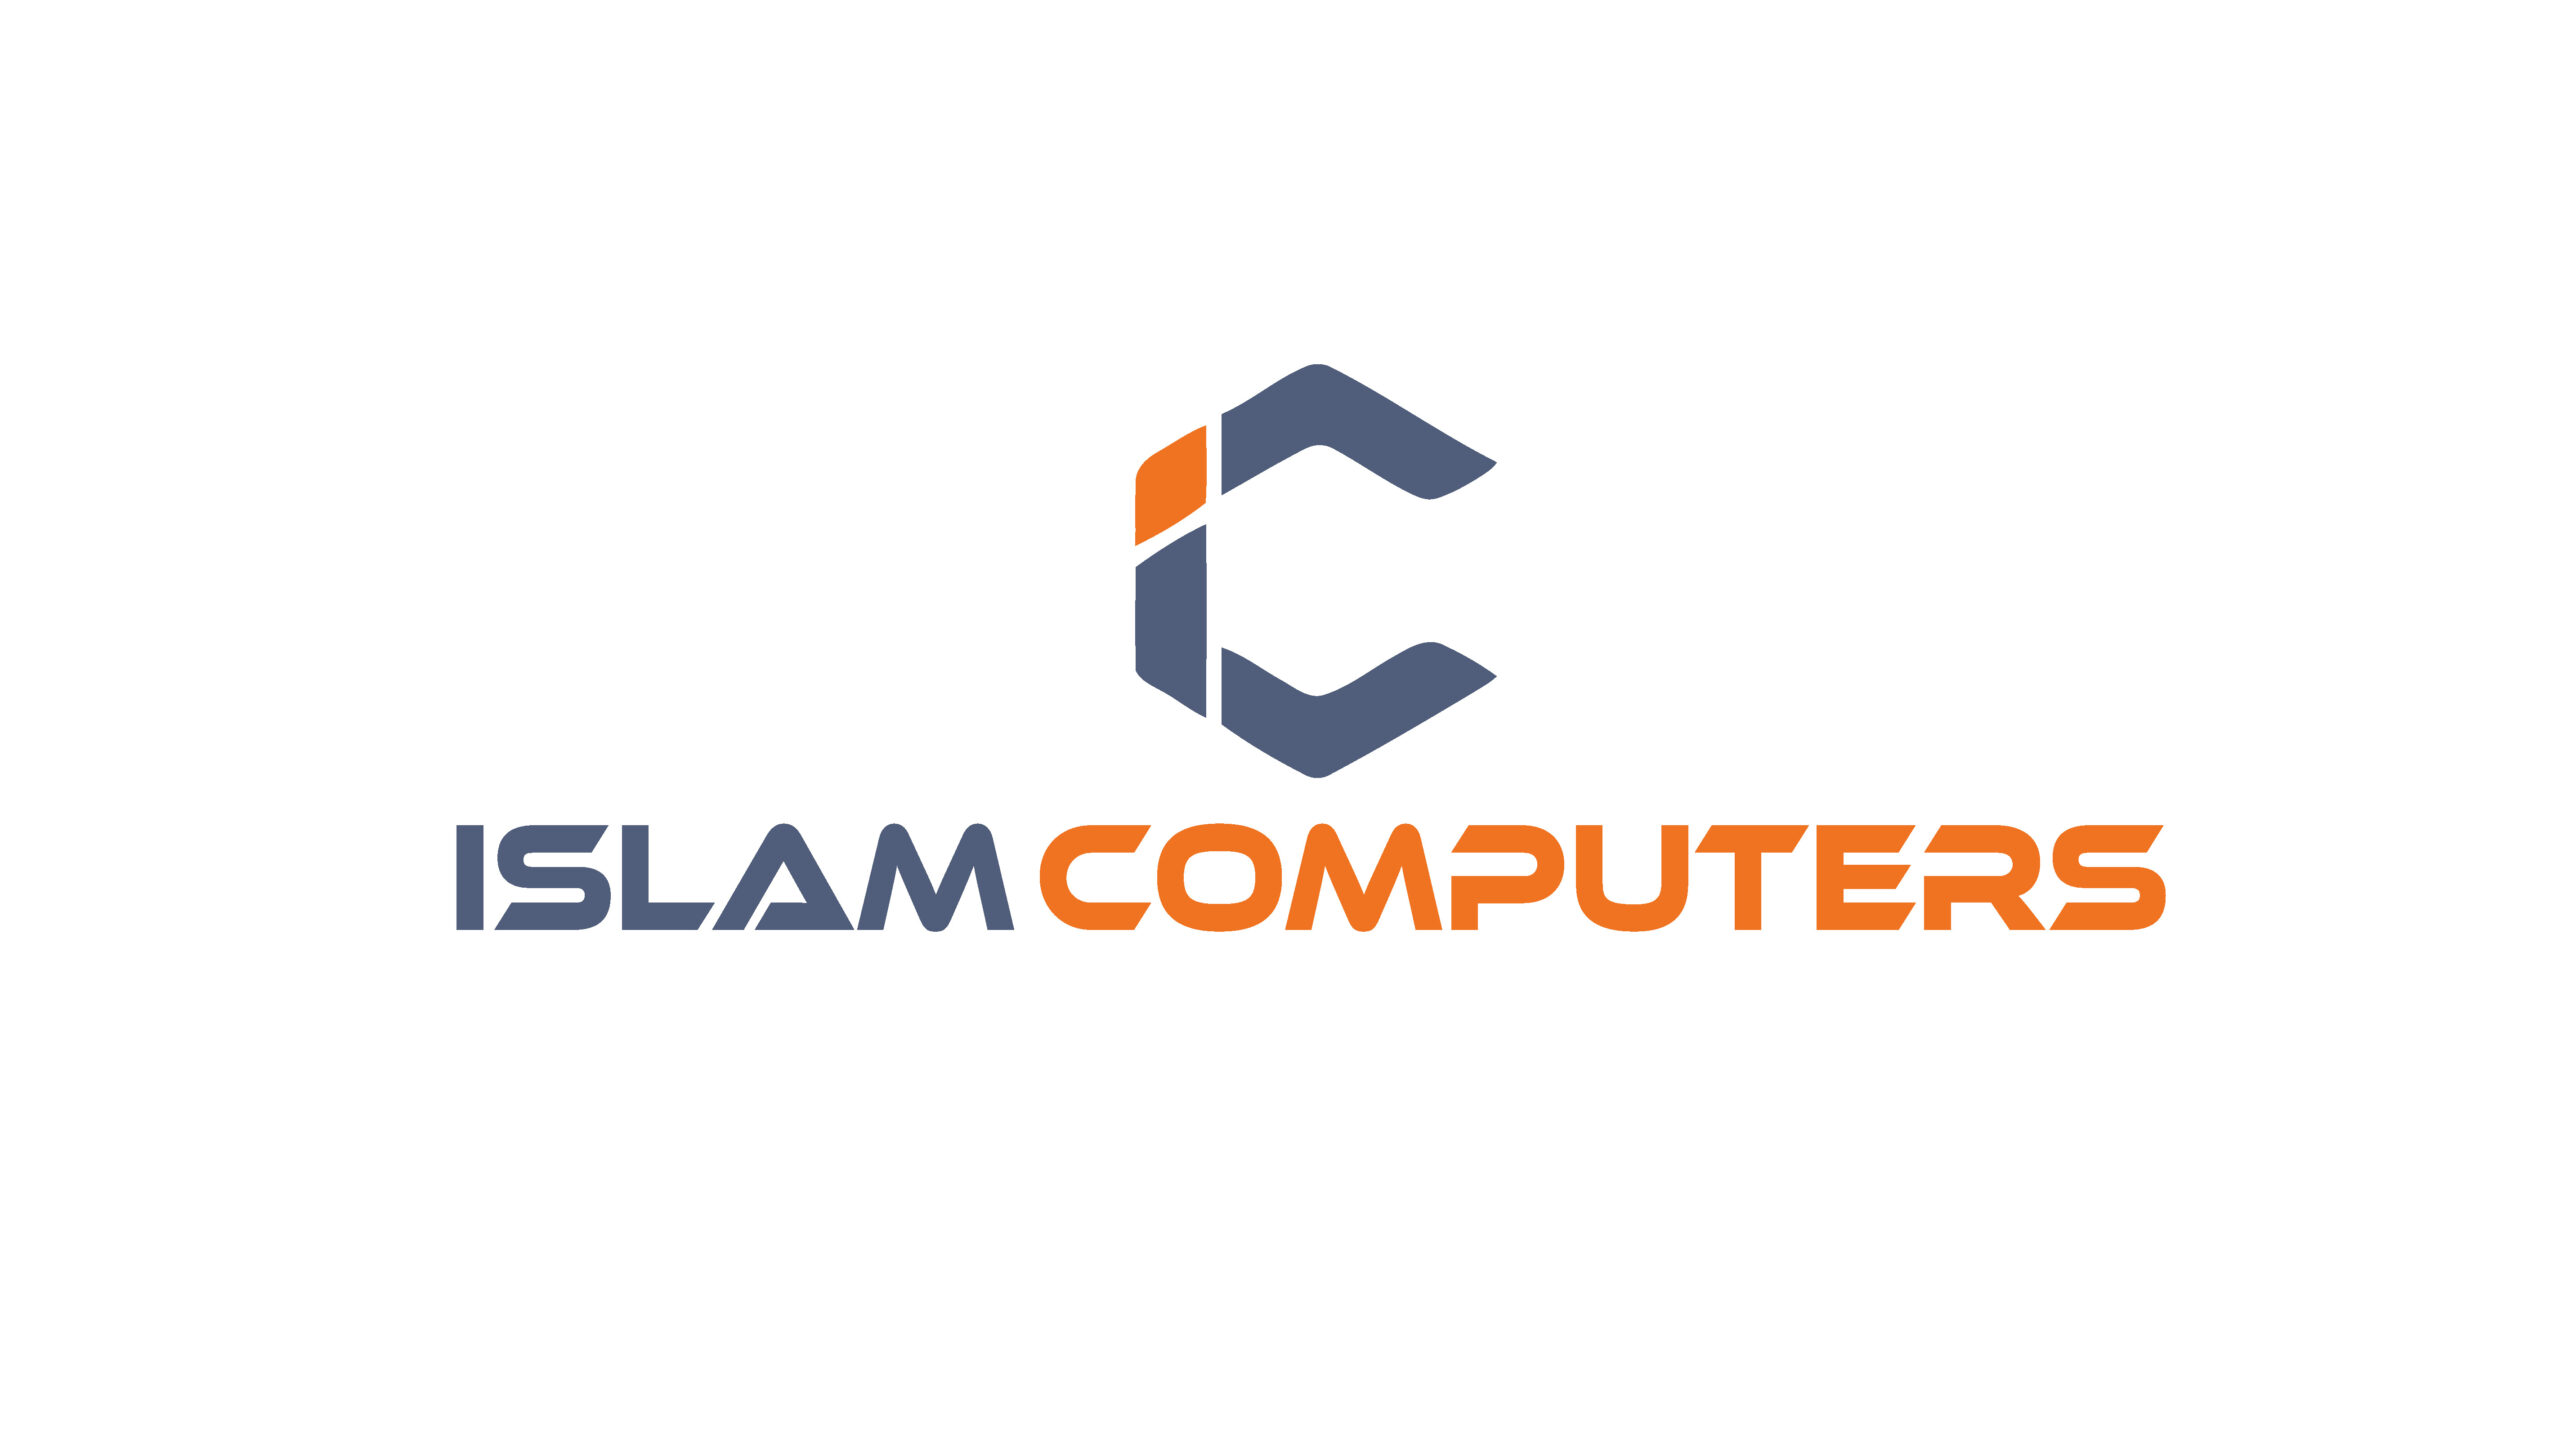 Islam Computers Laptop Computer Accessories Shop